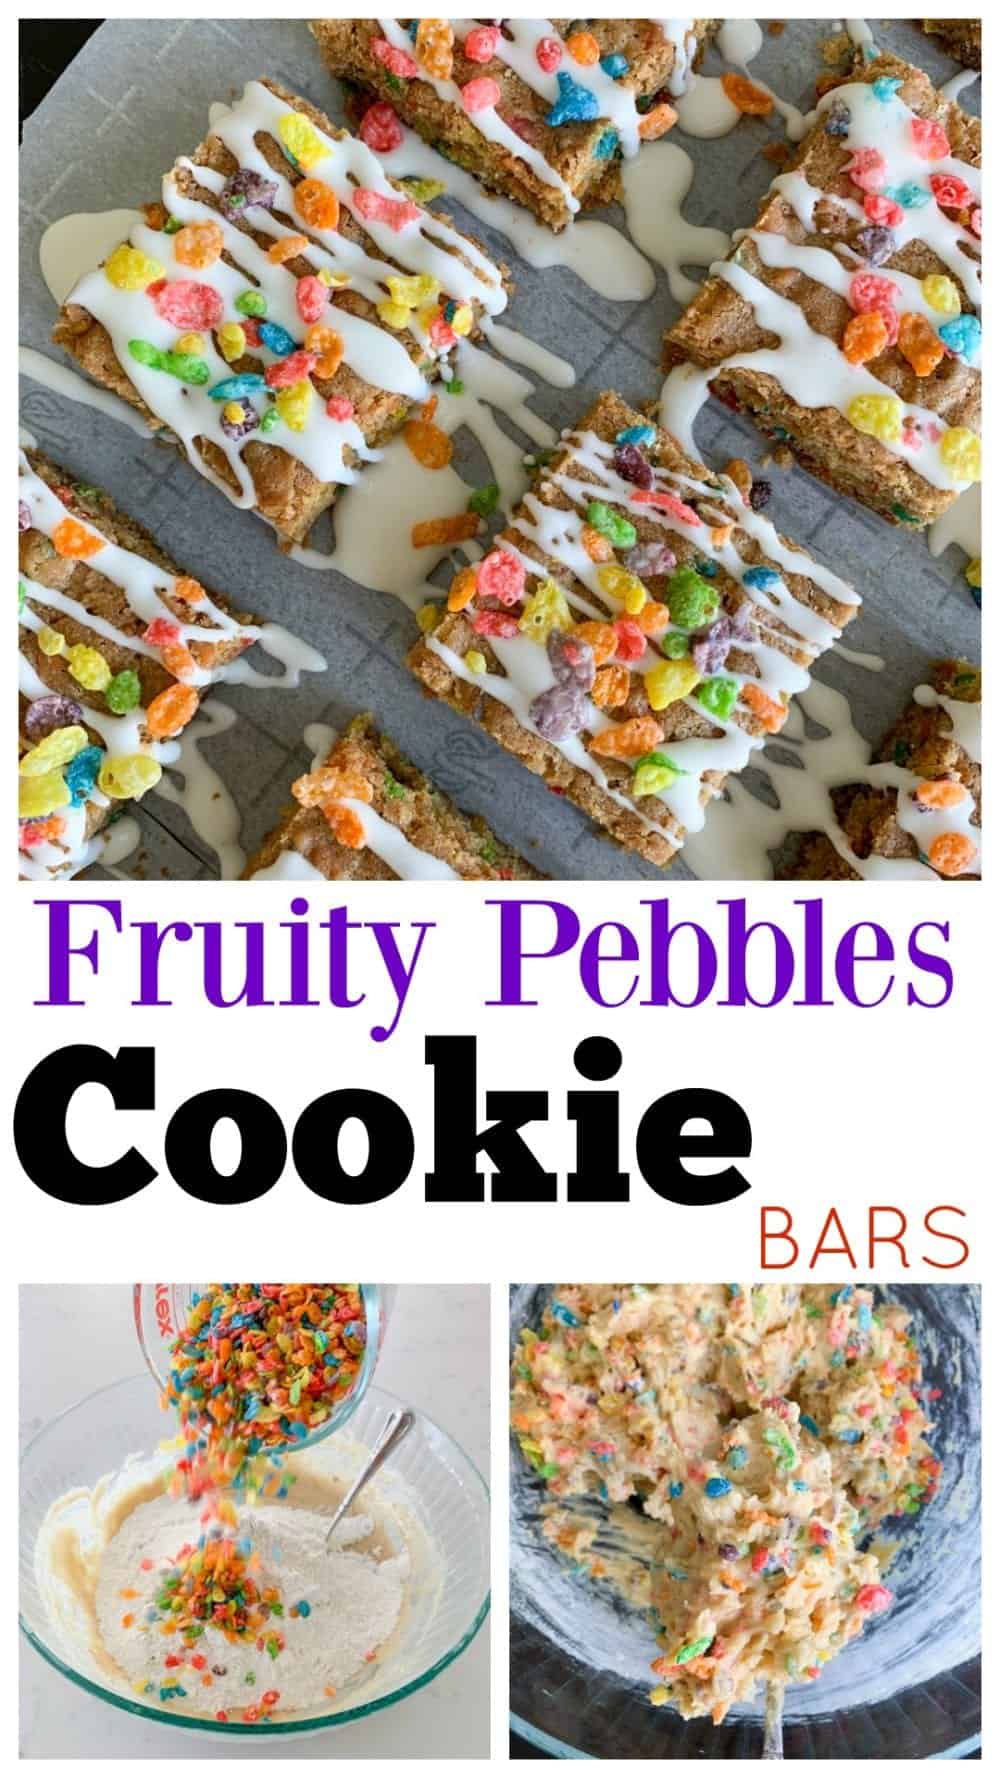 Fruity Pebbles Cookie Bars | Homemade Cookie Bars Recipe